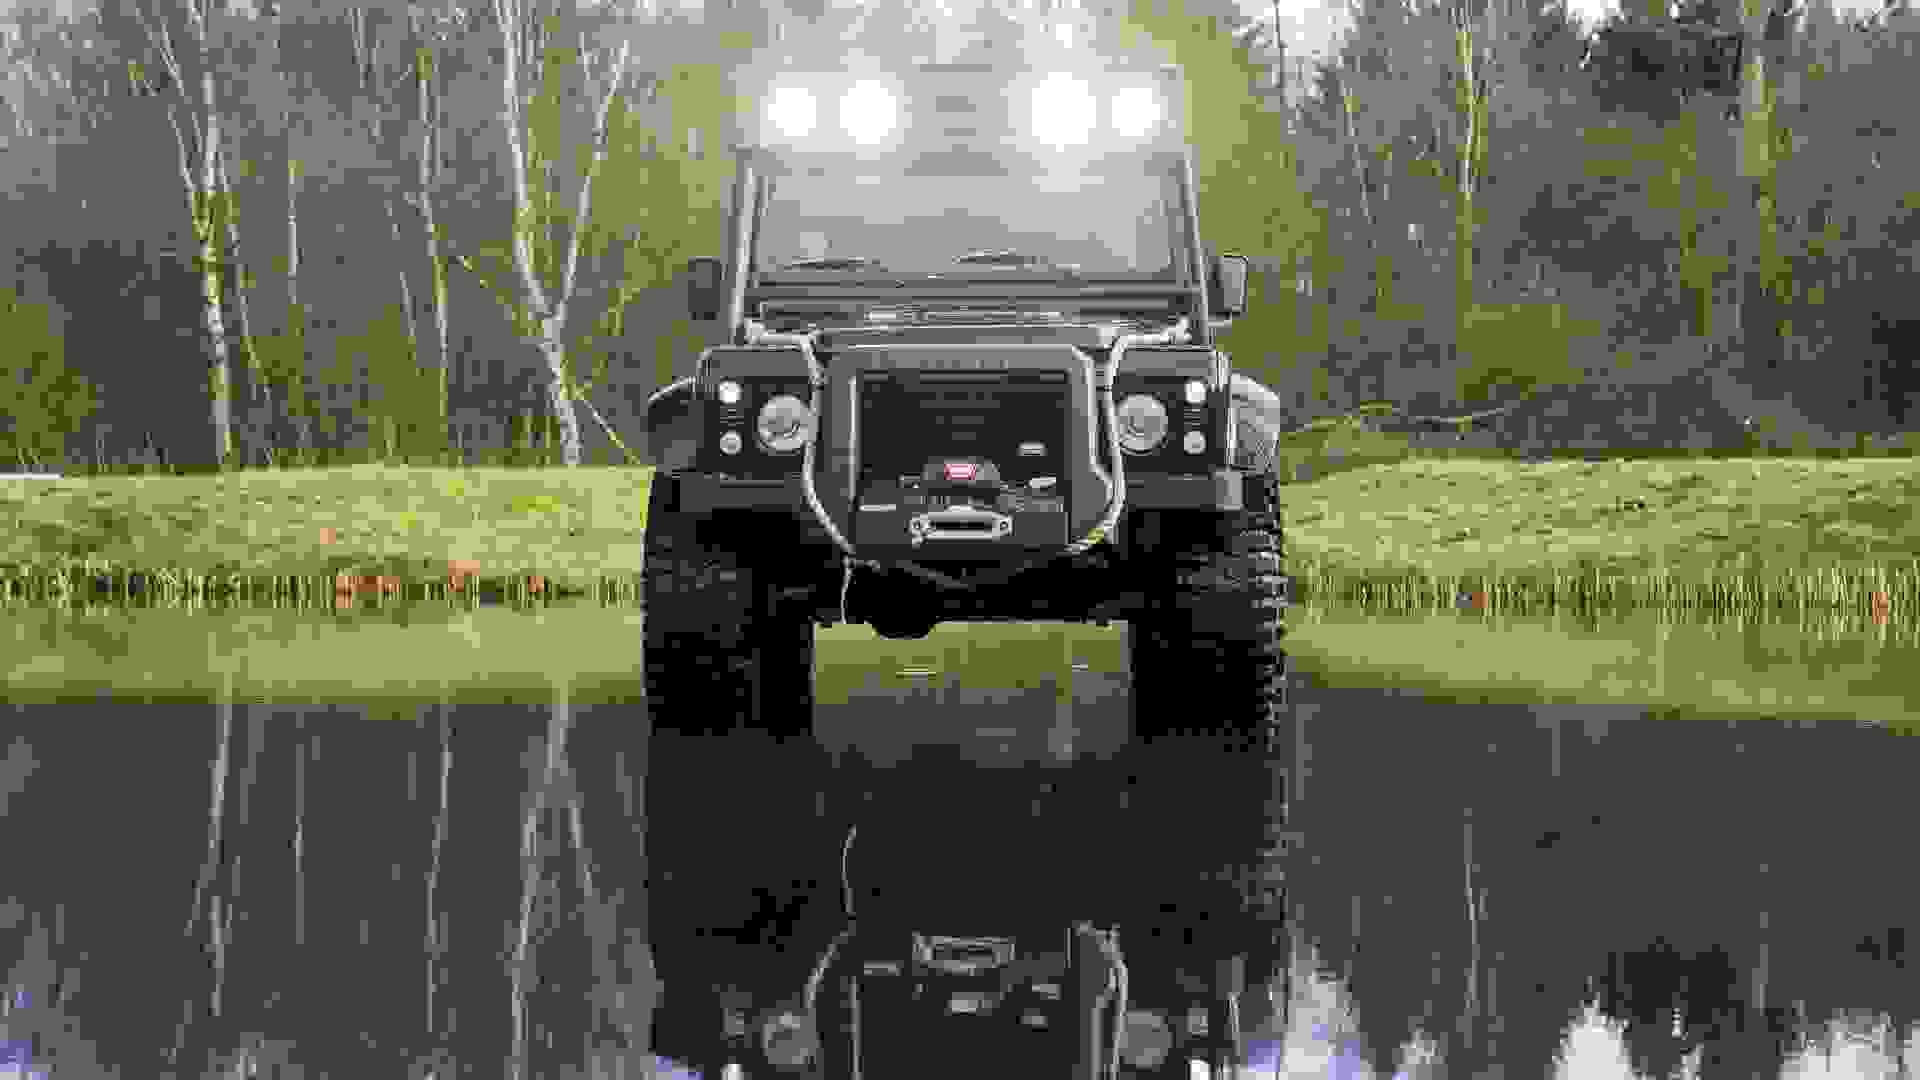 Land Rover Defender 110 Pick-Up Photo b5bf5251-76df-49df-9267-583556b6b86e.jpg